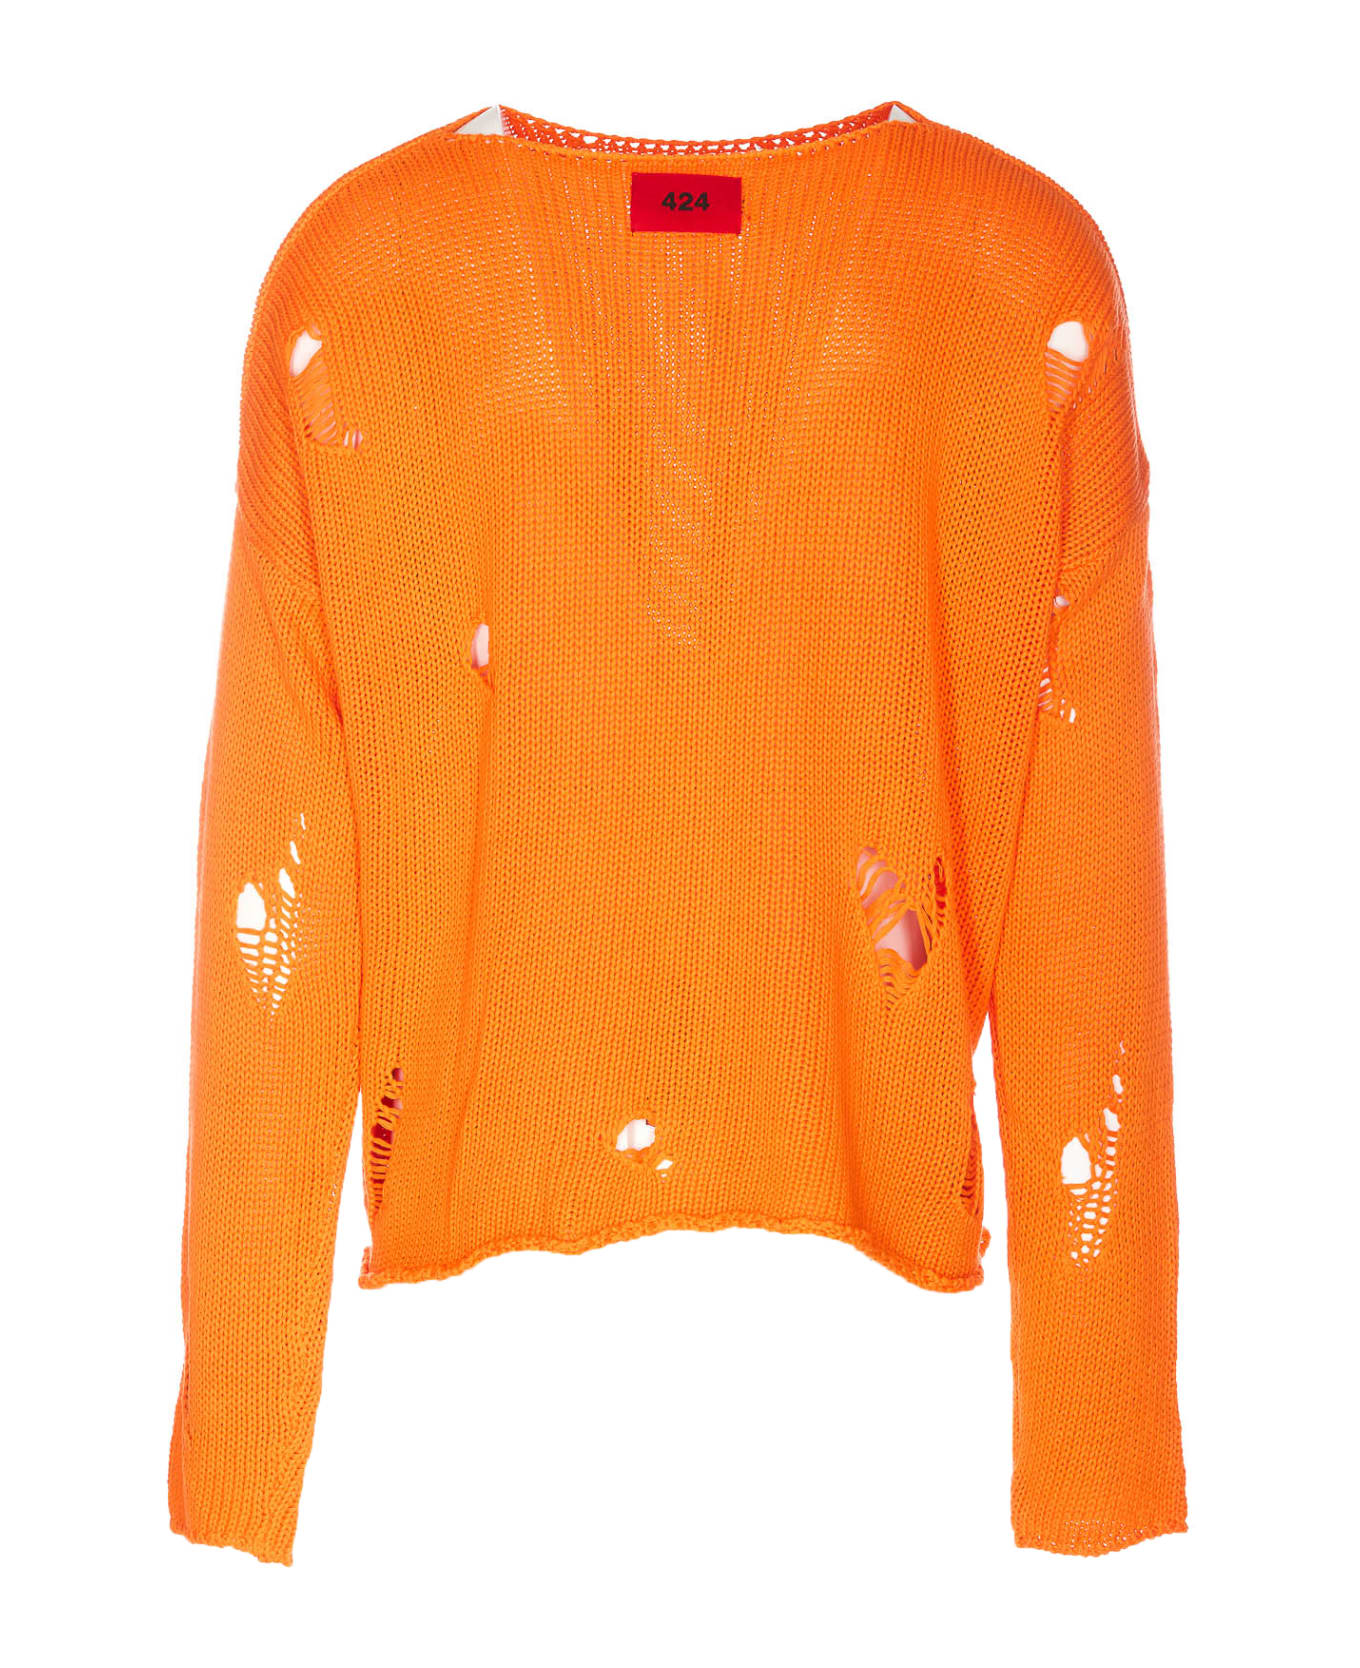 FourTwoFour on Fairfax Distressed Sweater - Orange ニットウェア